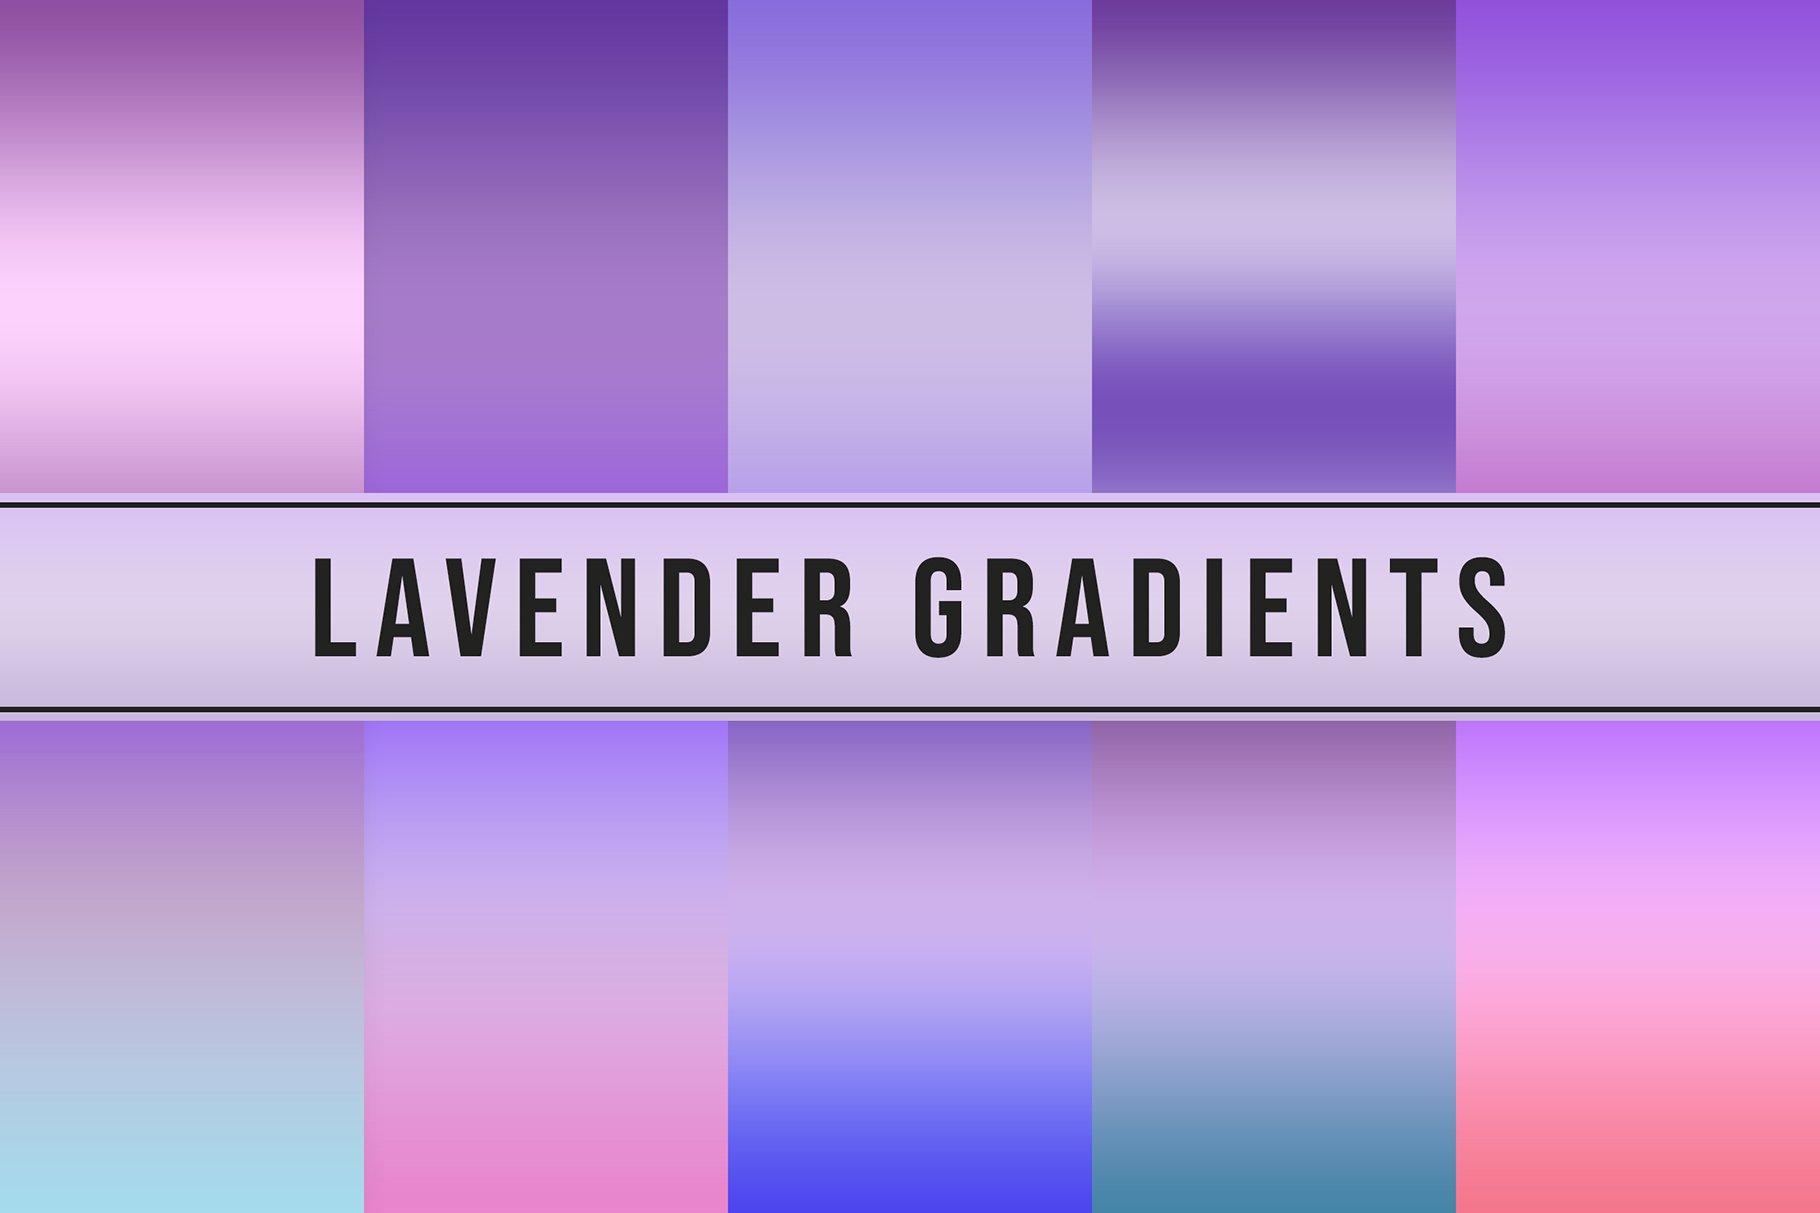 Lavender Gradientscover image.